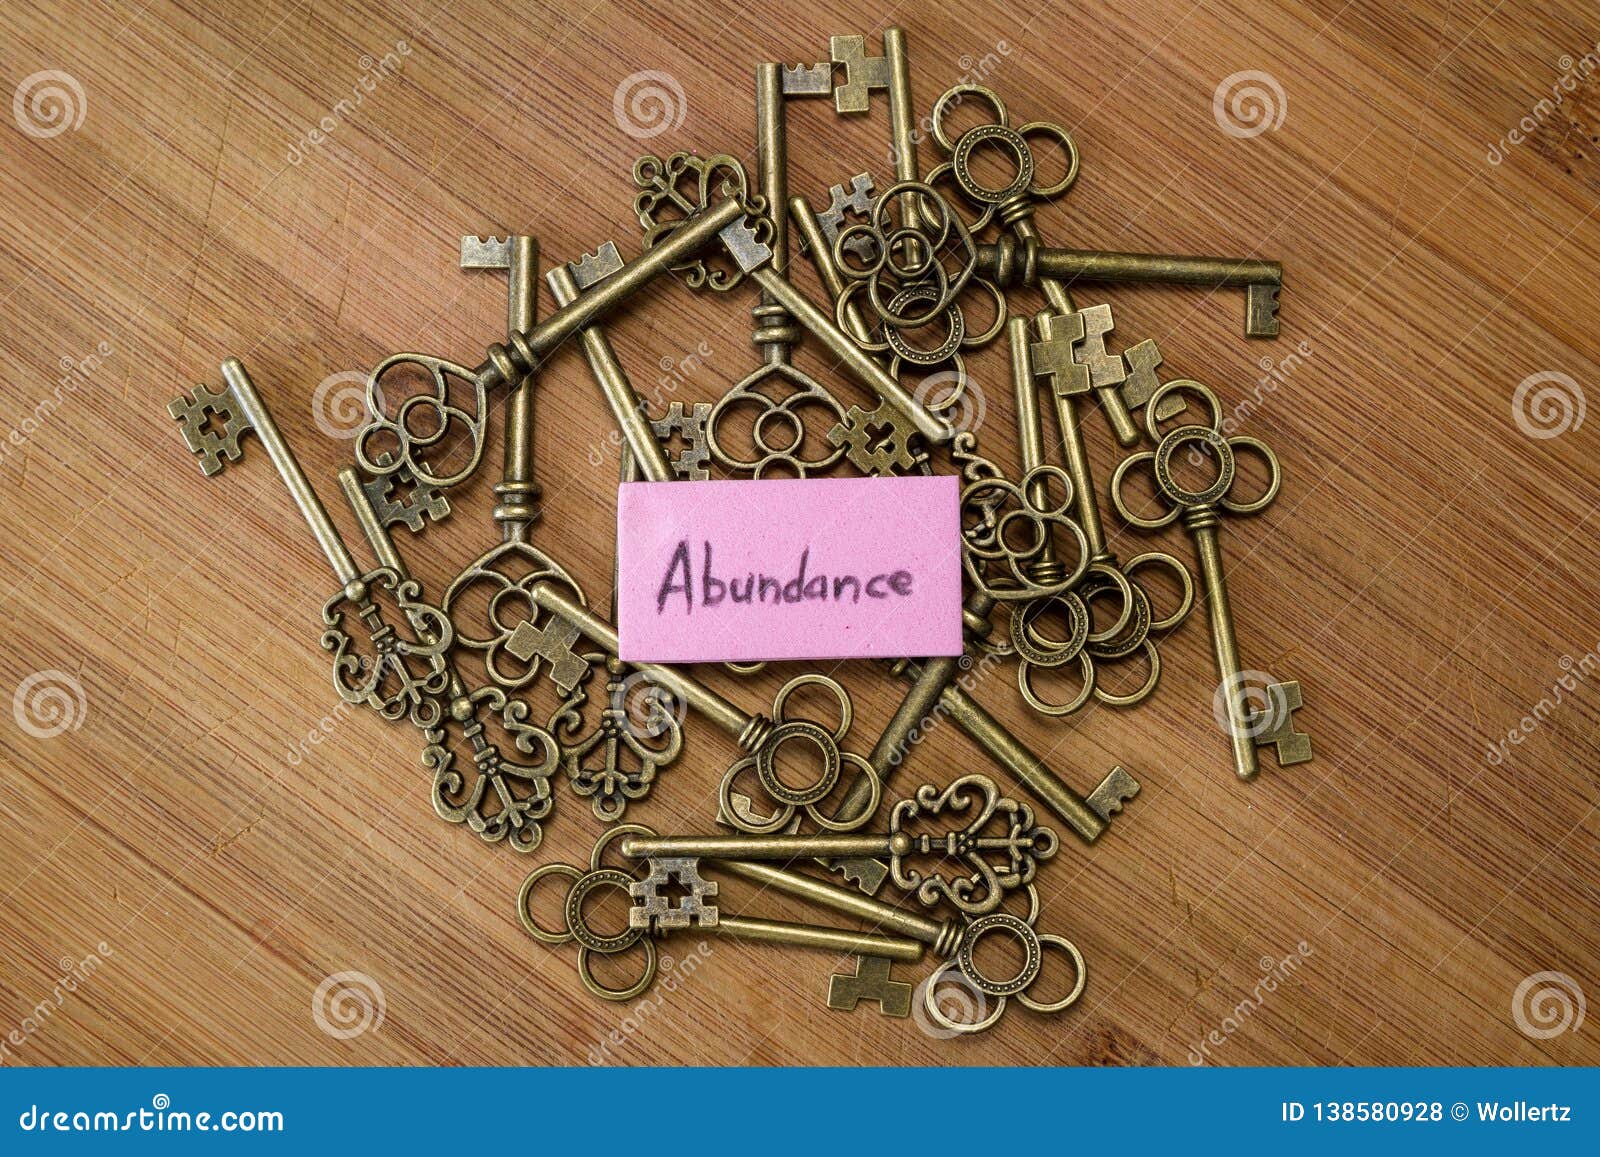 keys to abundance